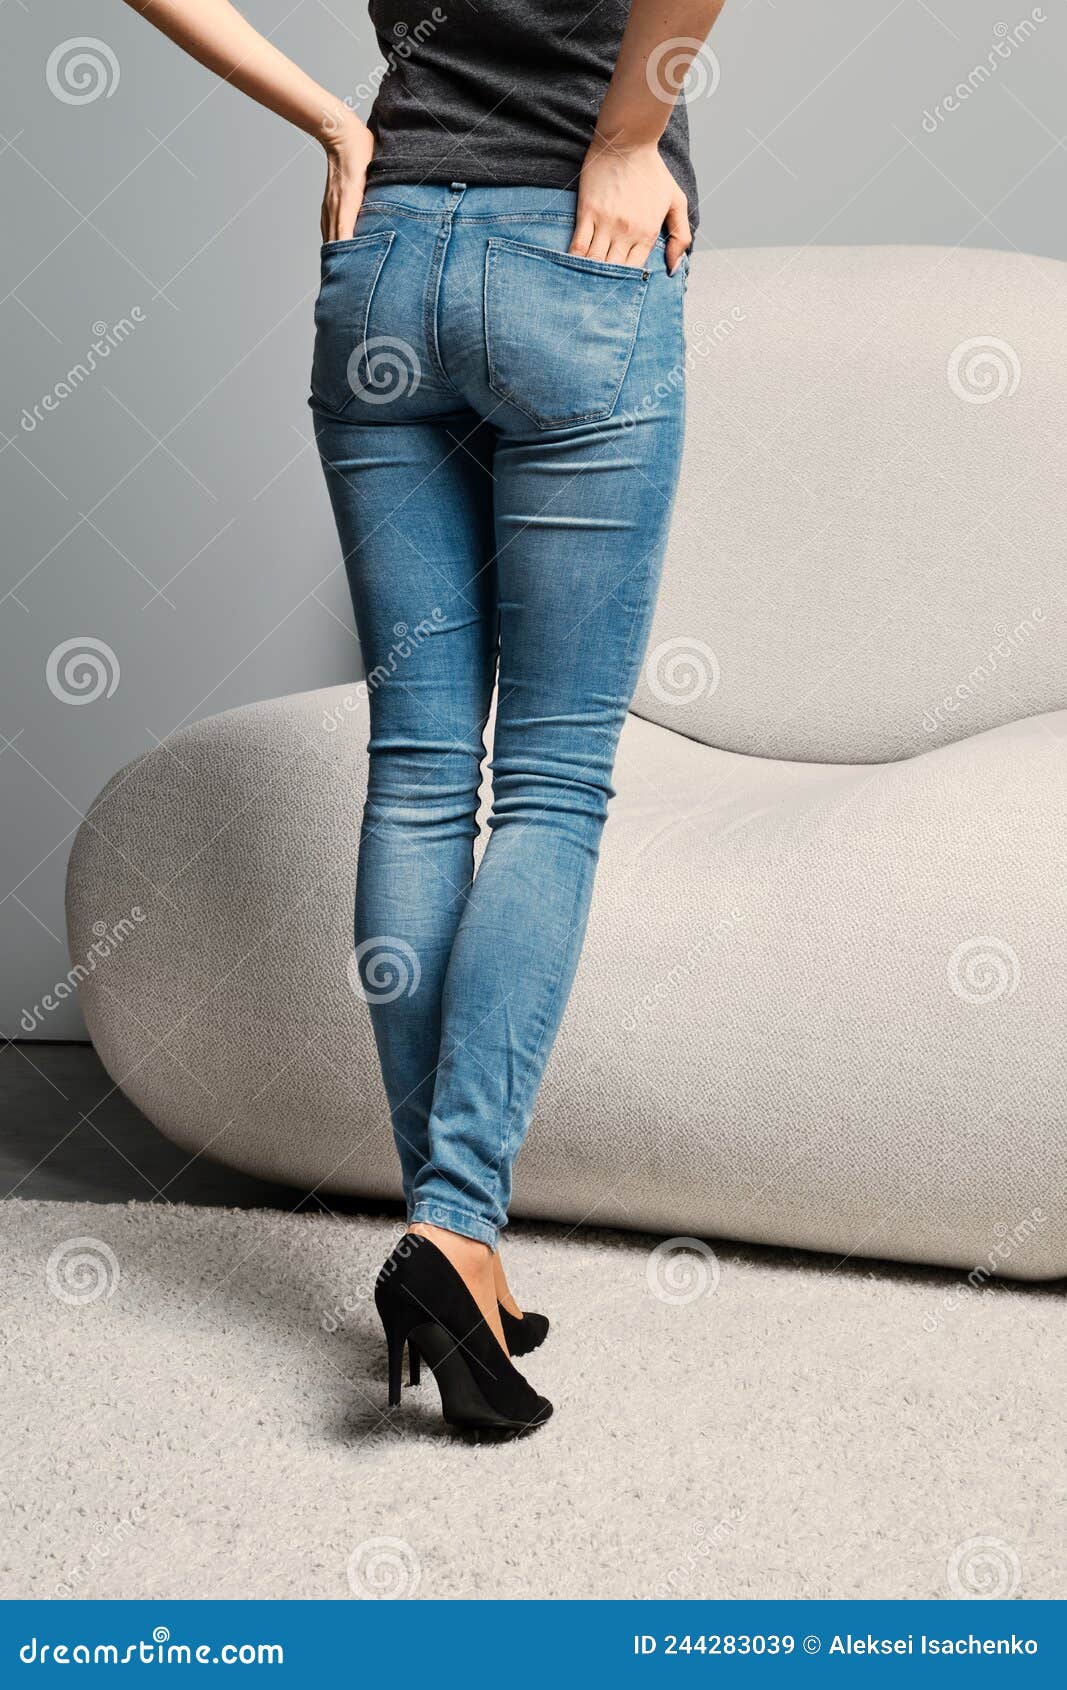 https://thumbs.dreamstime.com/z/cropped-image-female-legs-denim-jeans-standing-half-turning-back-cropped-image-female-legs-beige-pantyhose-denim-244283039.jpg